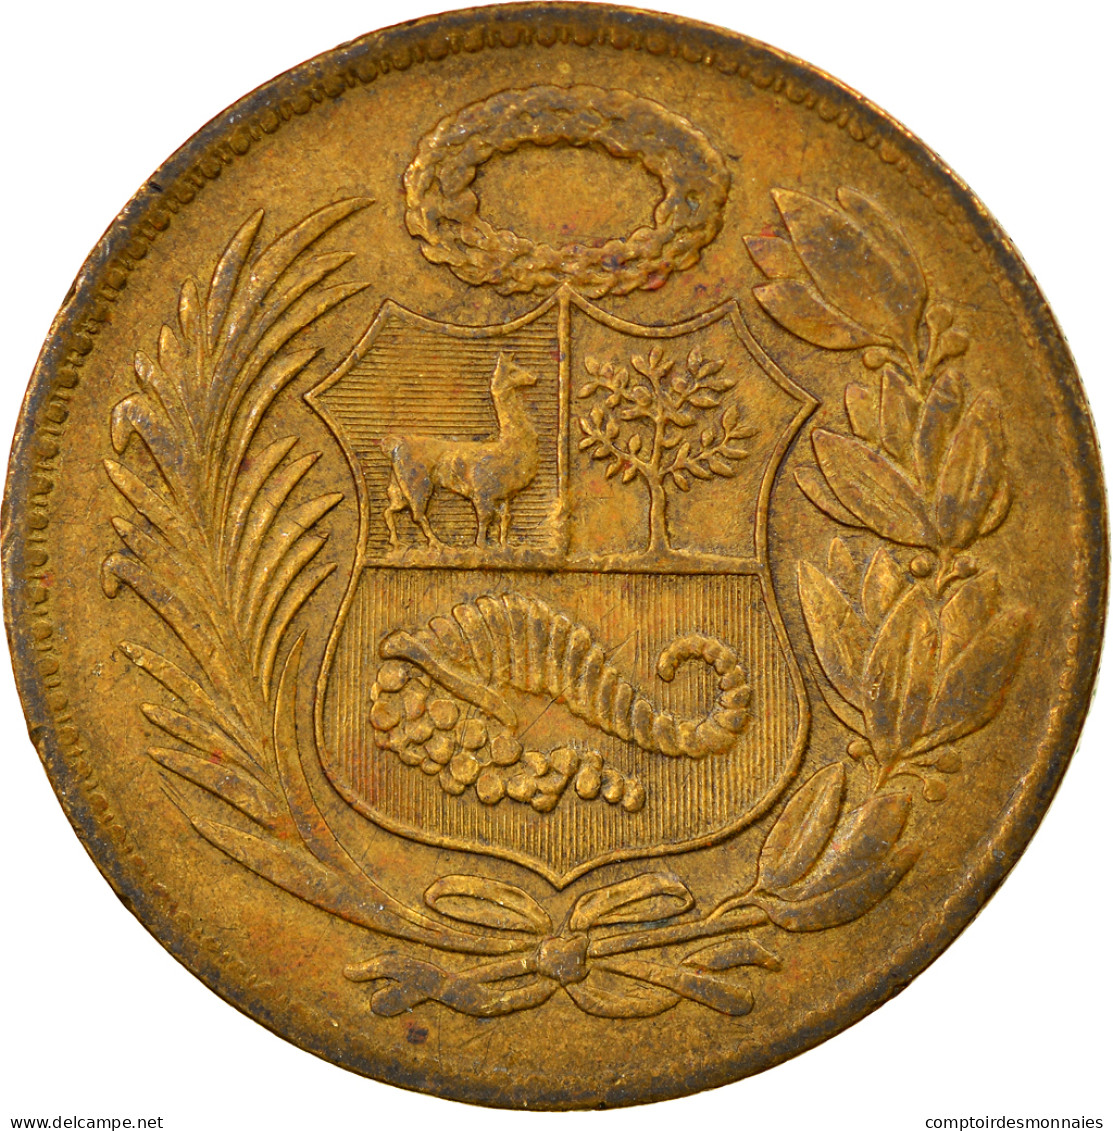 Monnaie, Pérou, Sol, 1963, Lima, TTB, Laiton, KM:222 - Peru